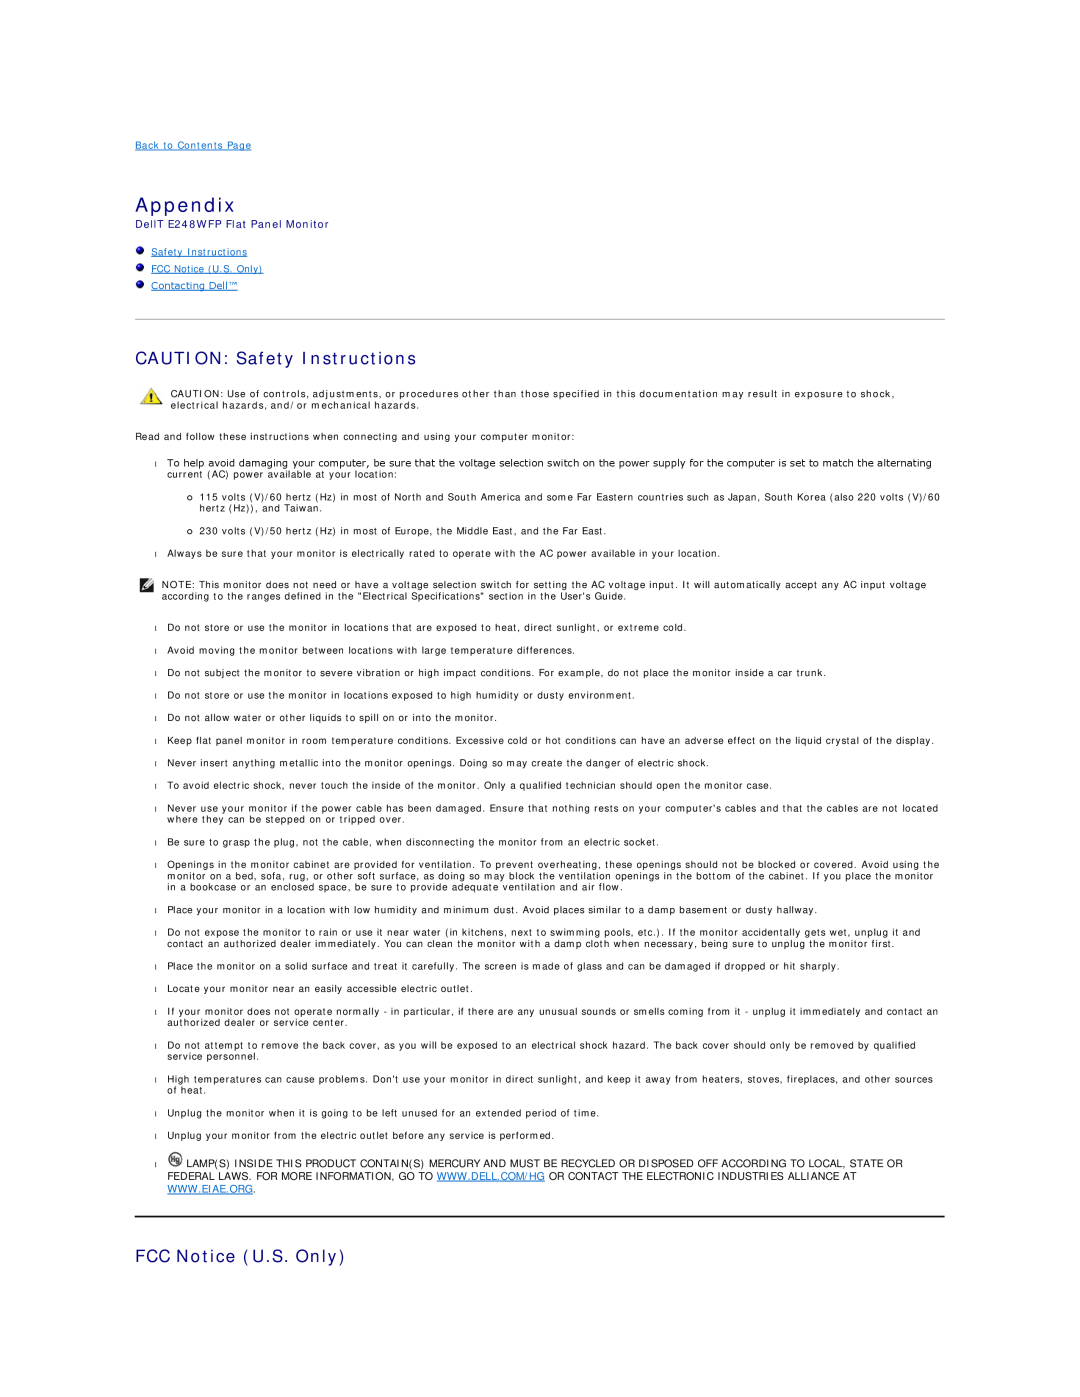 Dell appendix Appendix, CAUTION Safety Instructions, FCC Notice U.S. Only, DellT E248WFP Flat Panel Monitor 